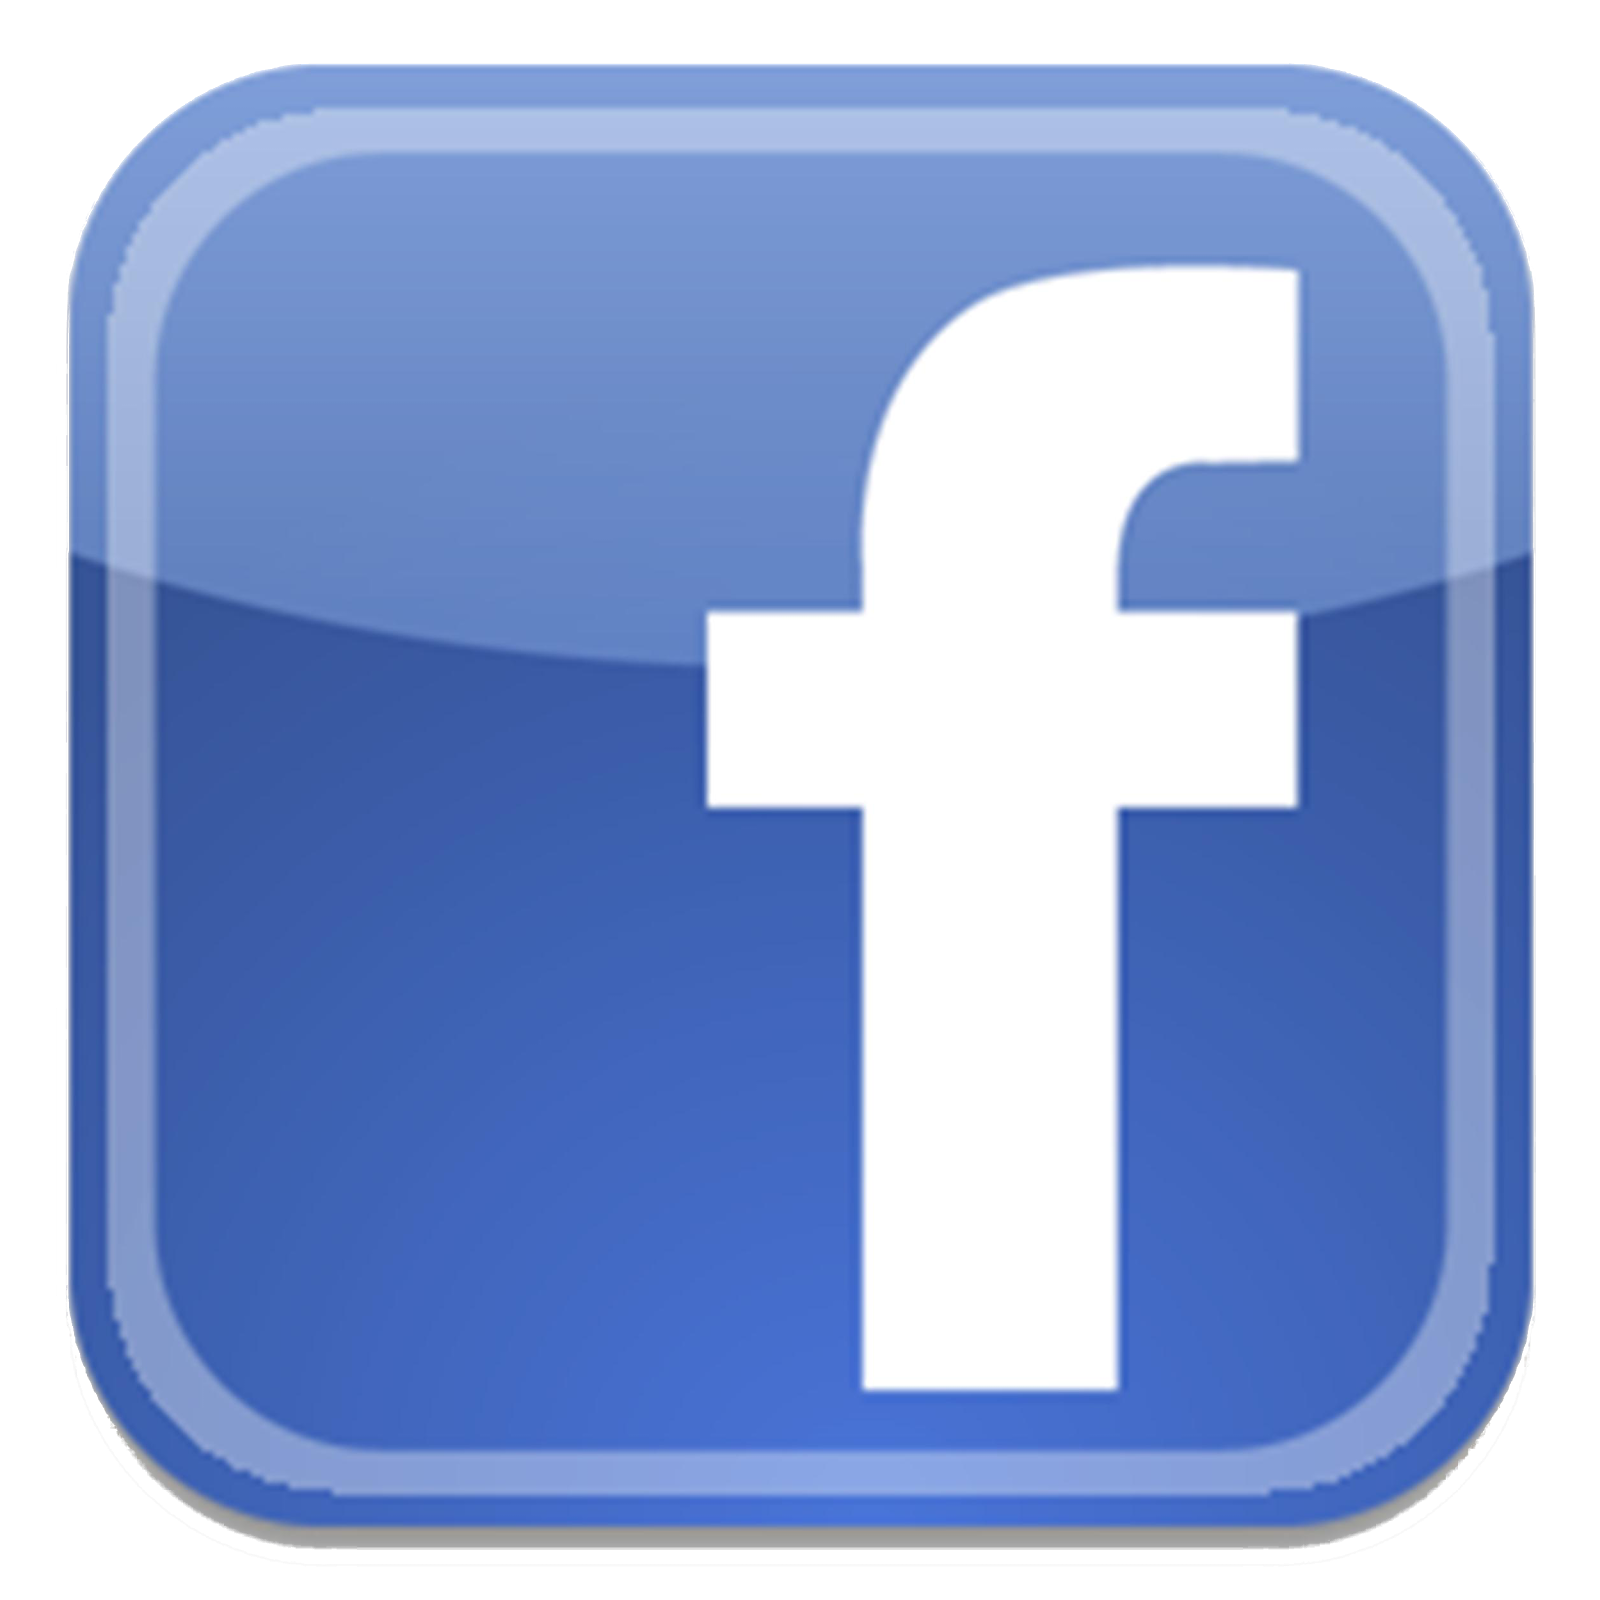 Risultati immagini per logo facebook